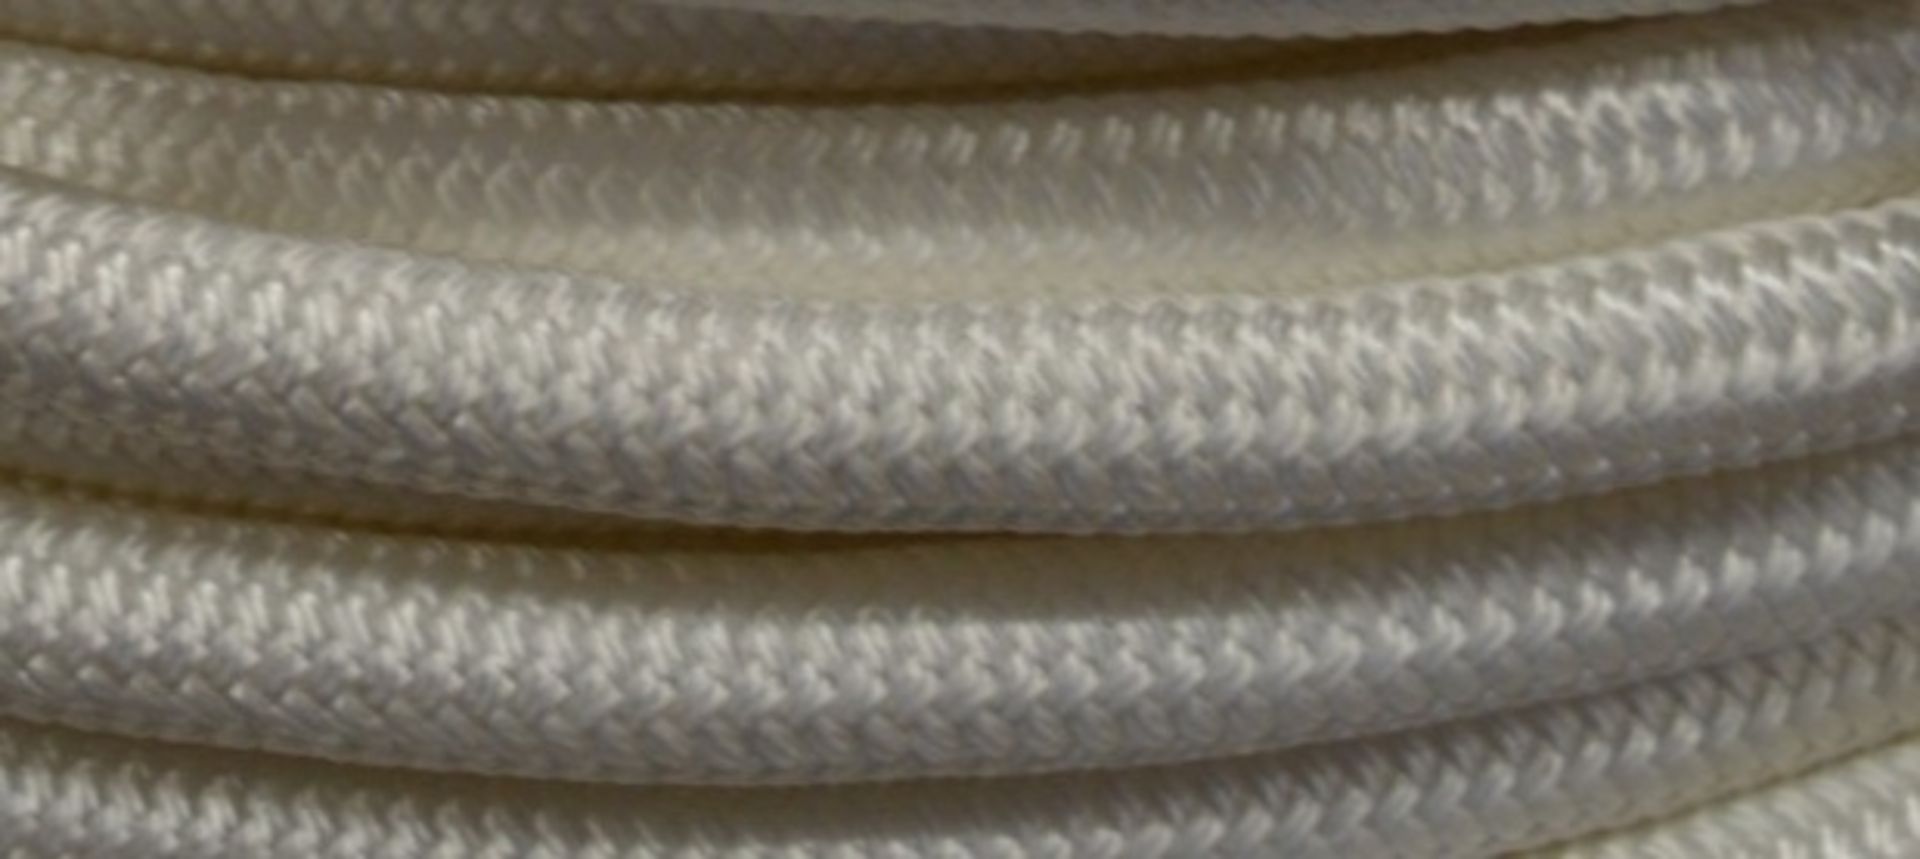 1 x Large Unused Bundle of Braid on Braid Rope - 12mm - Suitable For Various Applications - Image 6 of 6